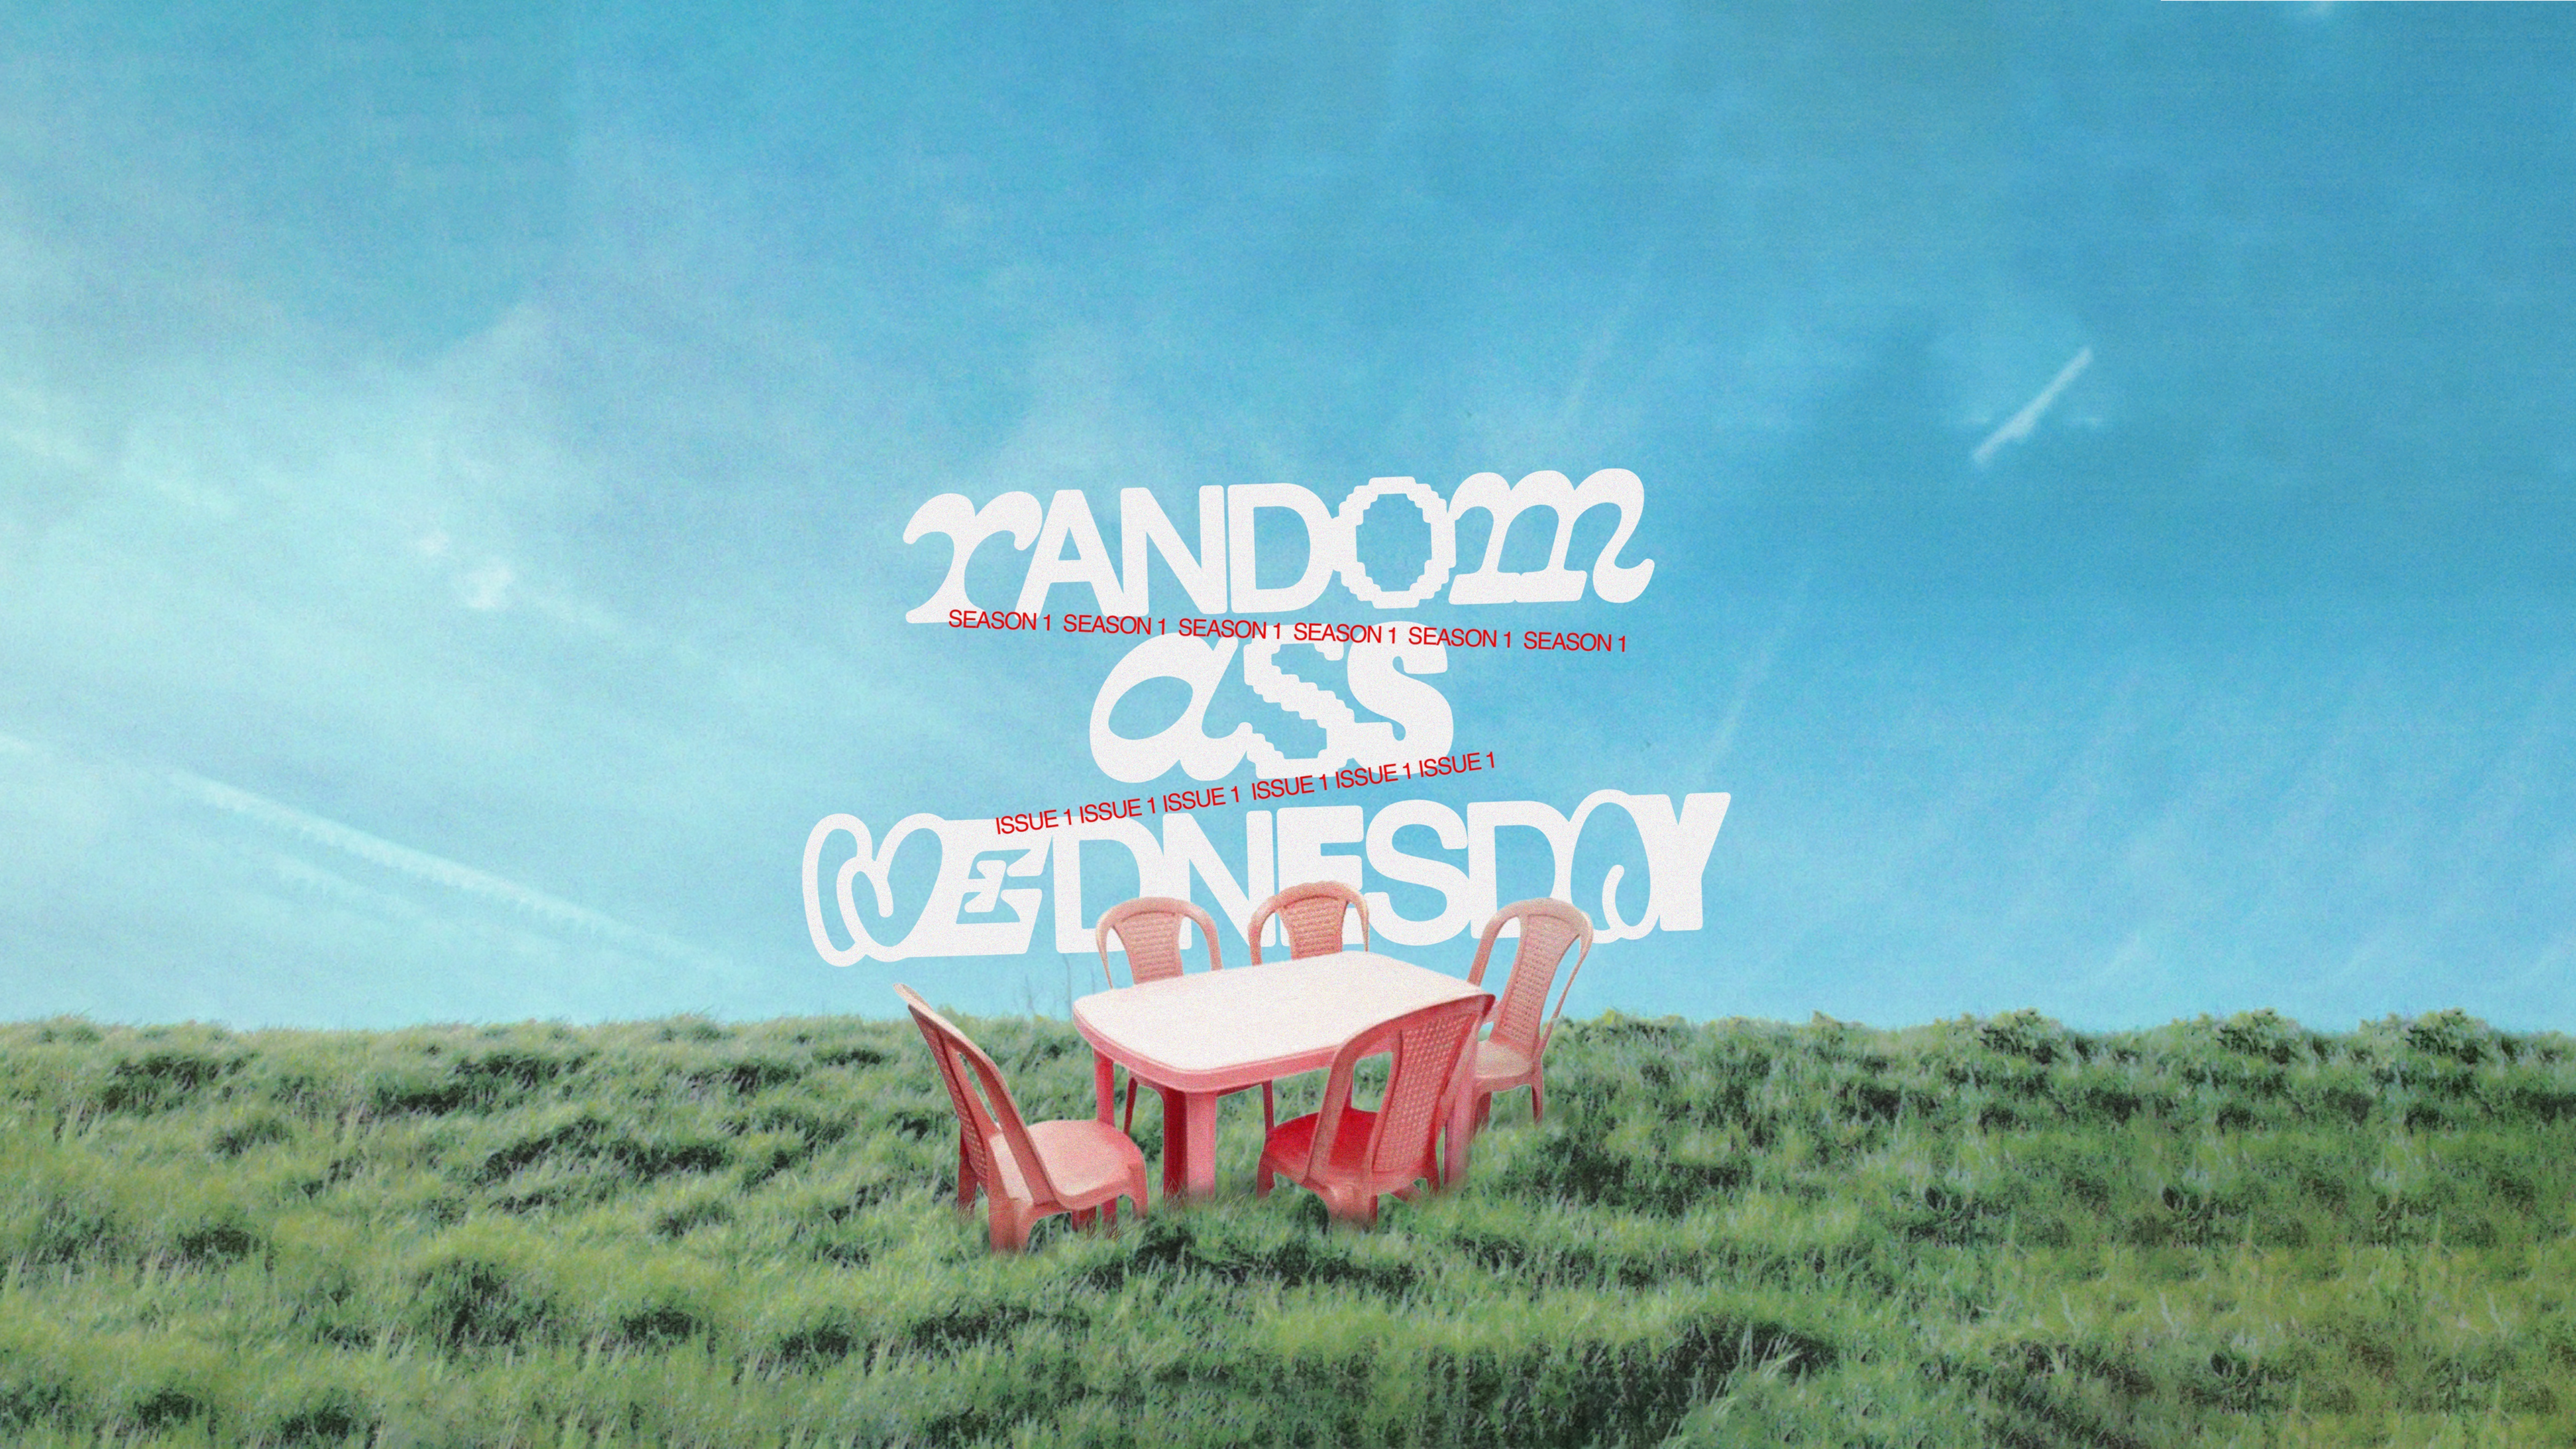 RANDOM-ASS WEDNESDAYS